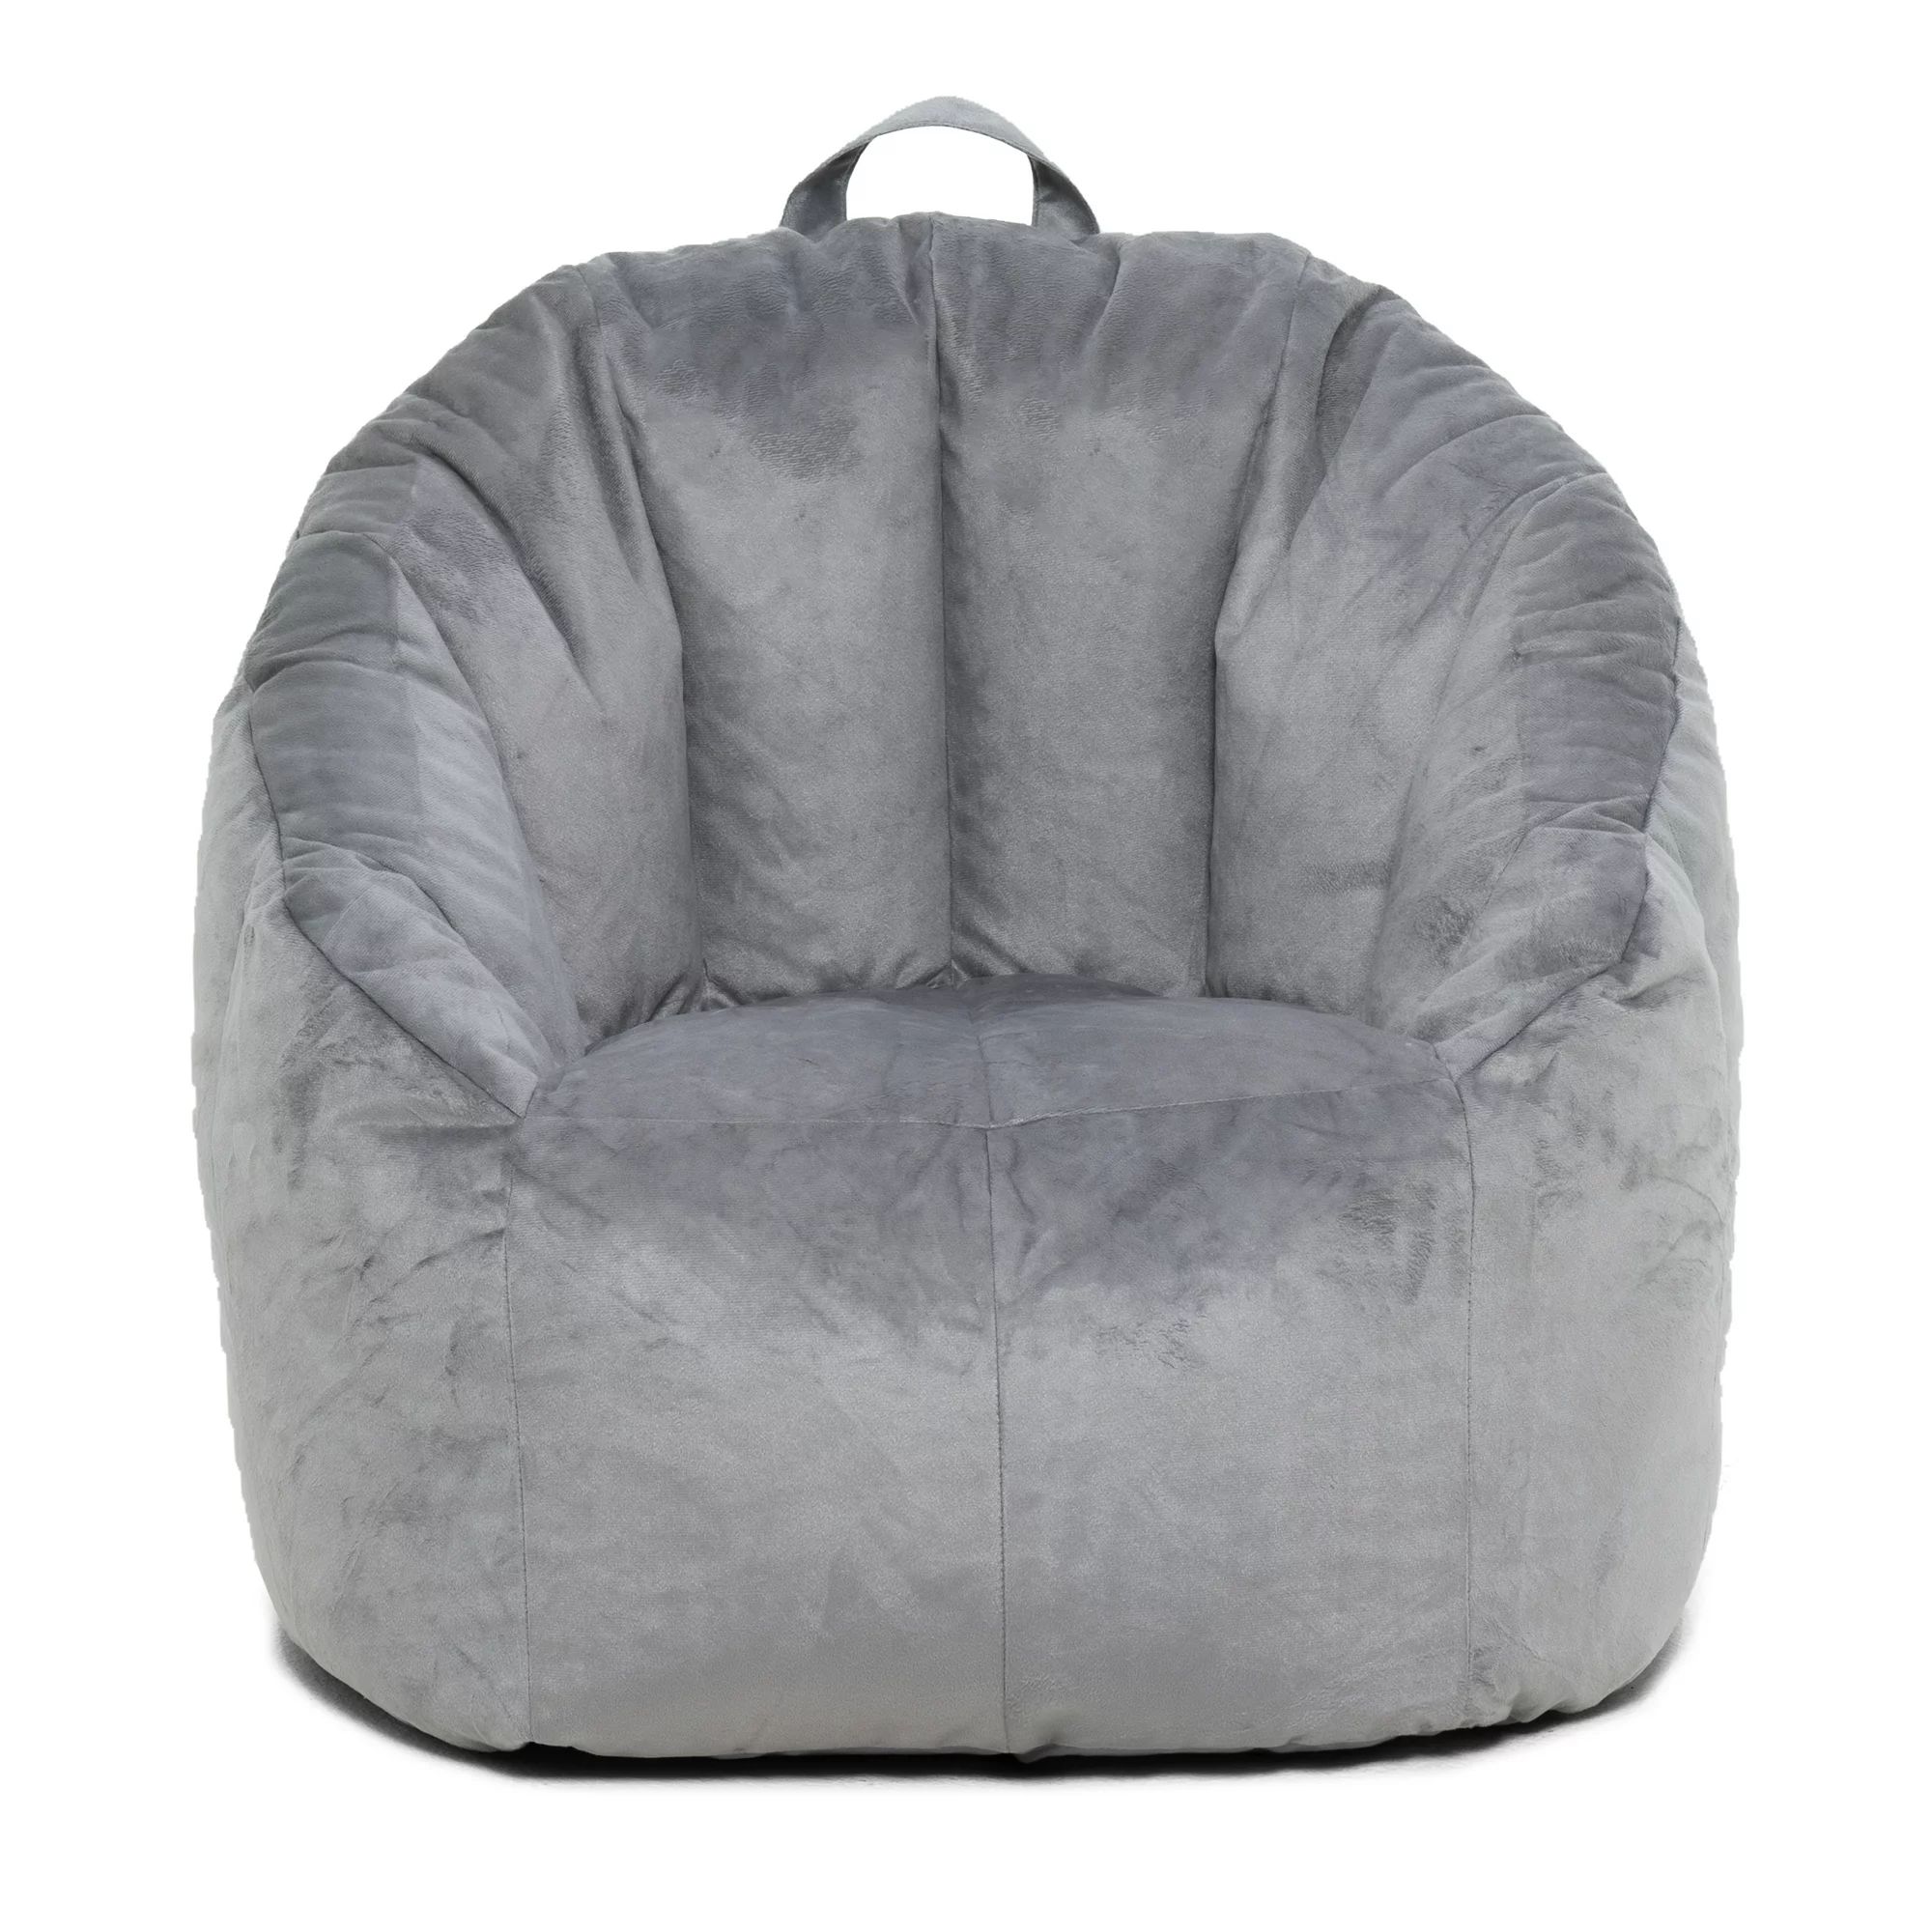 Big Joe Joey Bean Bag Chair, Multiple Colors - 28.5" x 24.5" x 26.5" | Walmart (US)